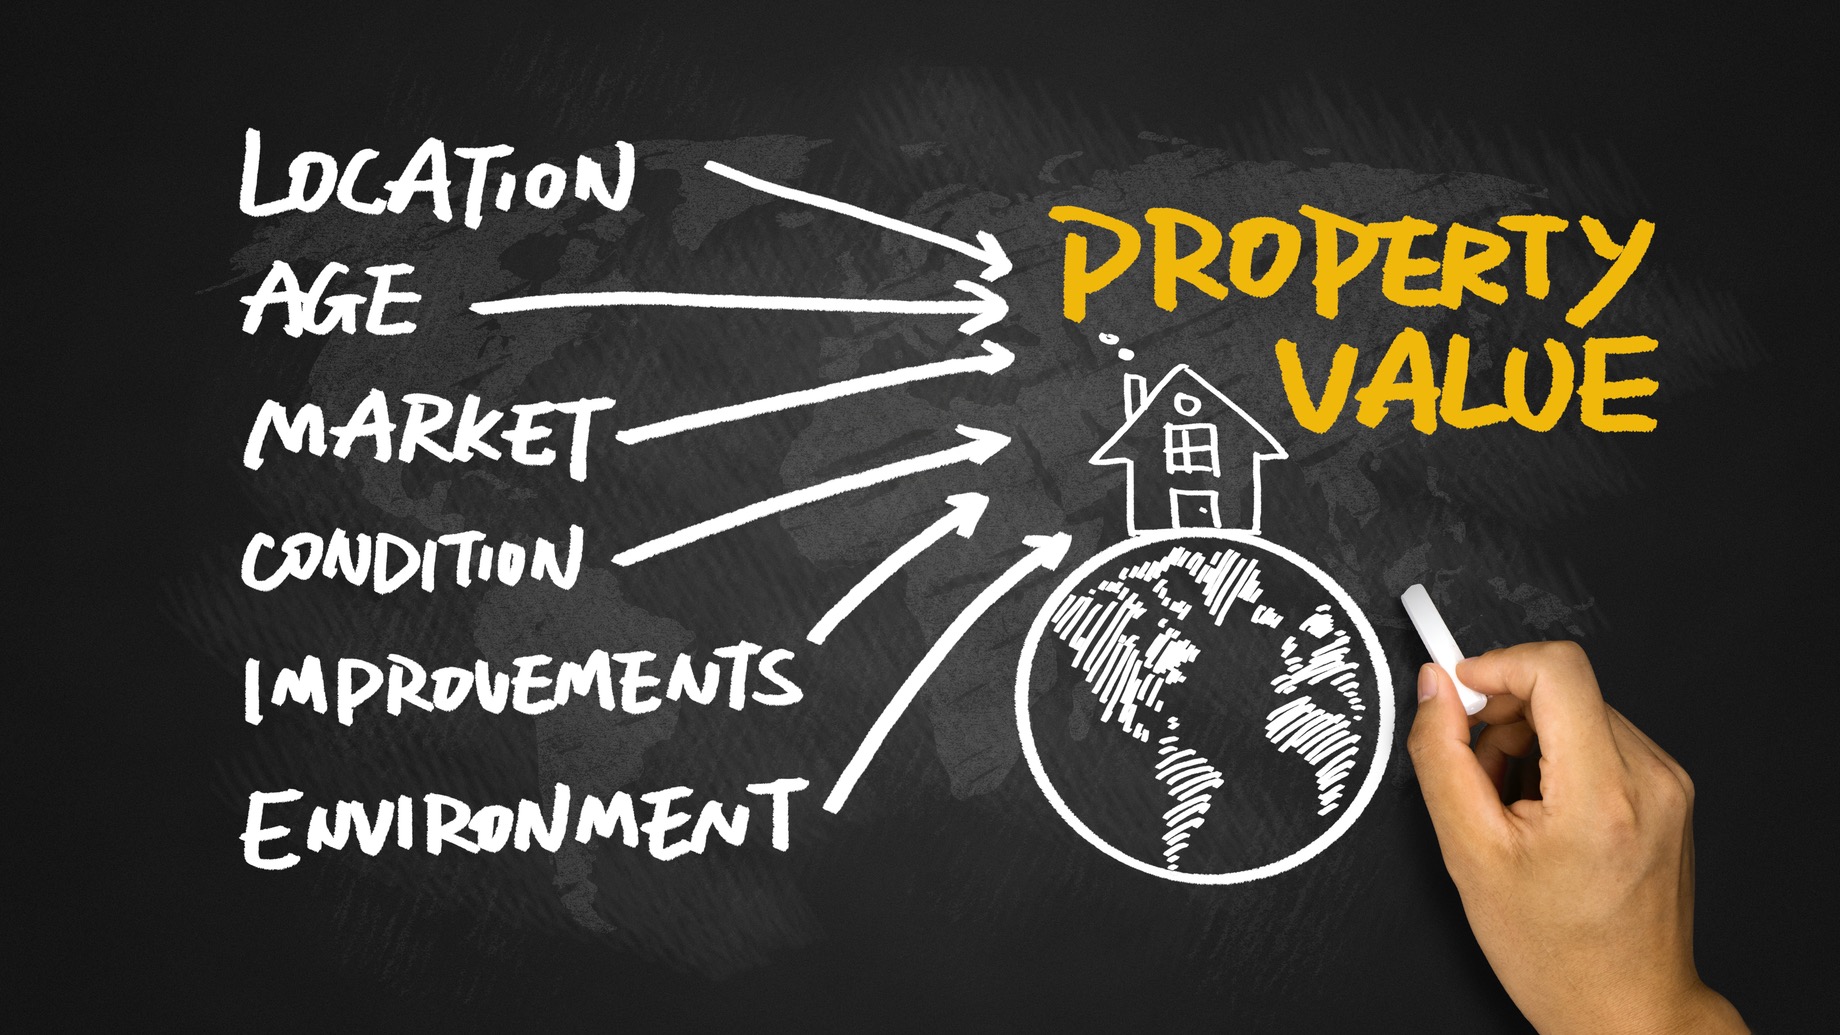 Property Value Appraisal